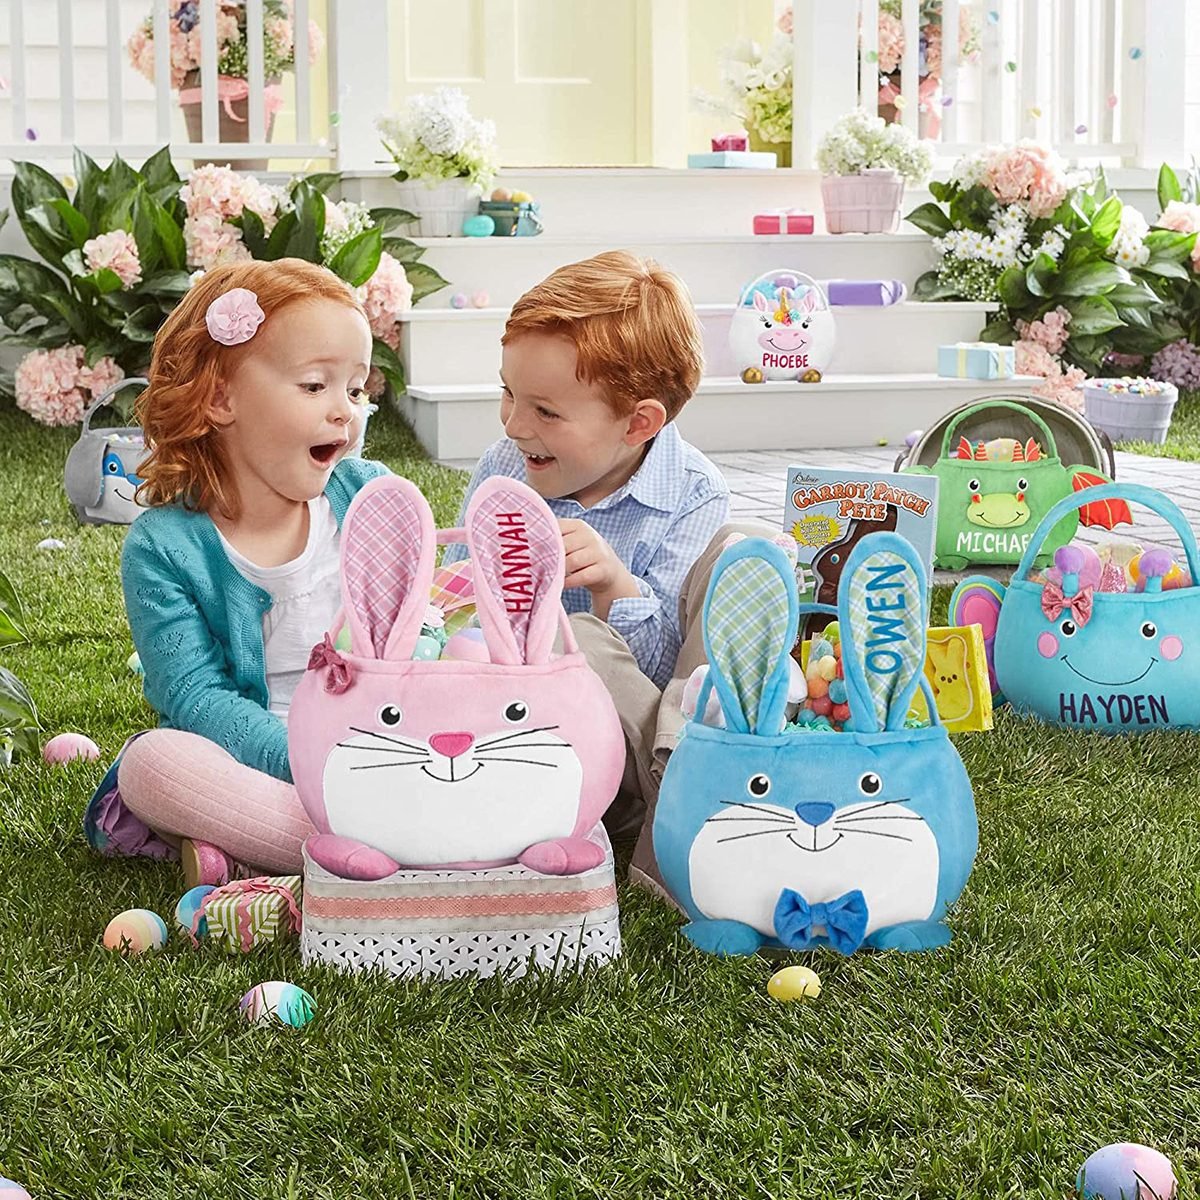 Personalized Easter Gift for Girls Little Girl Easter -  Sweden